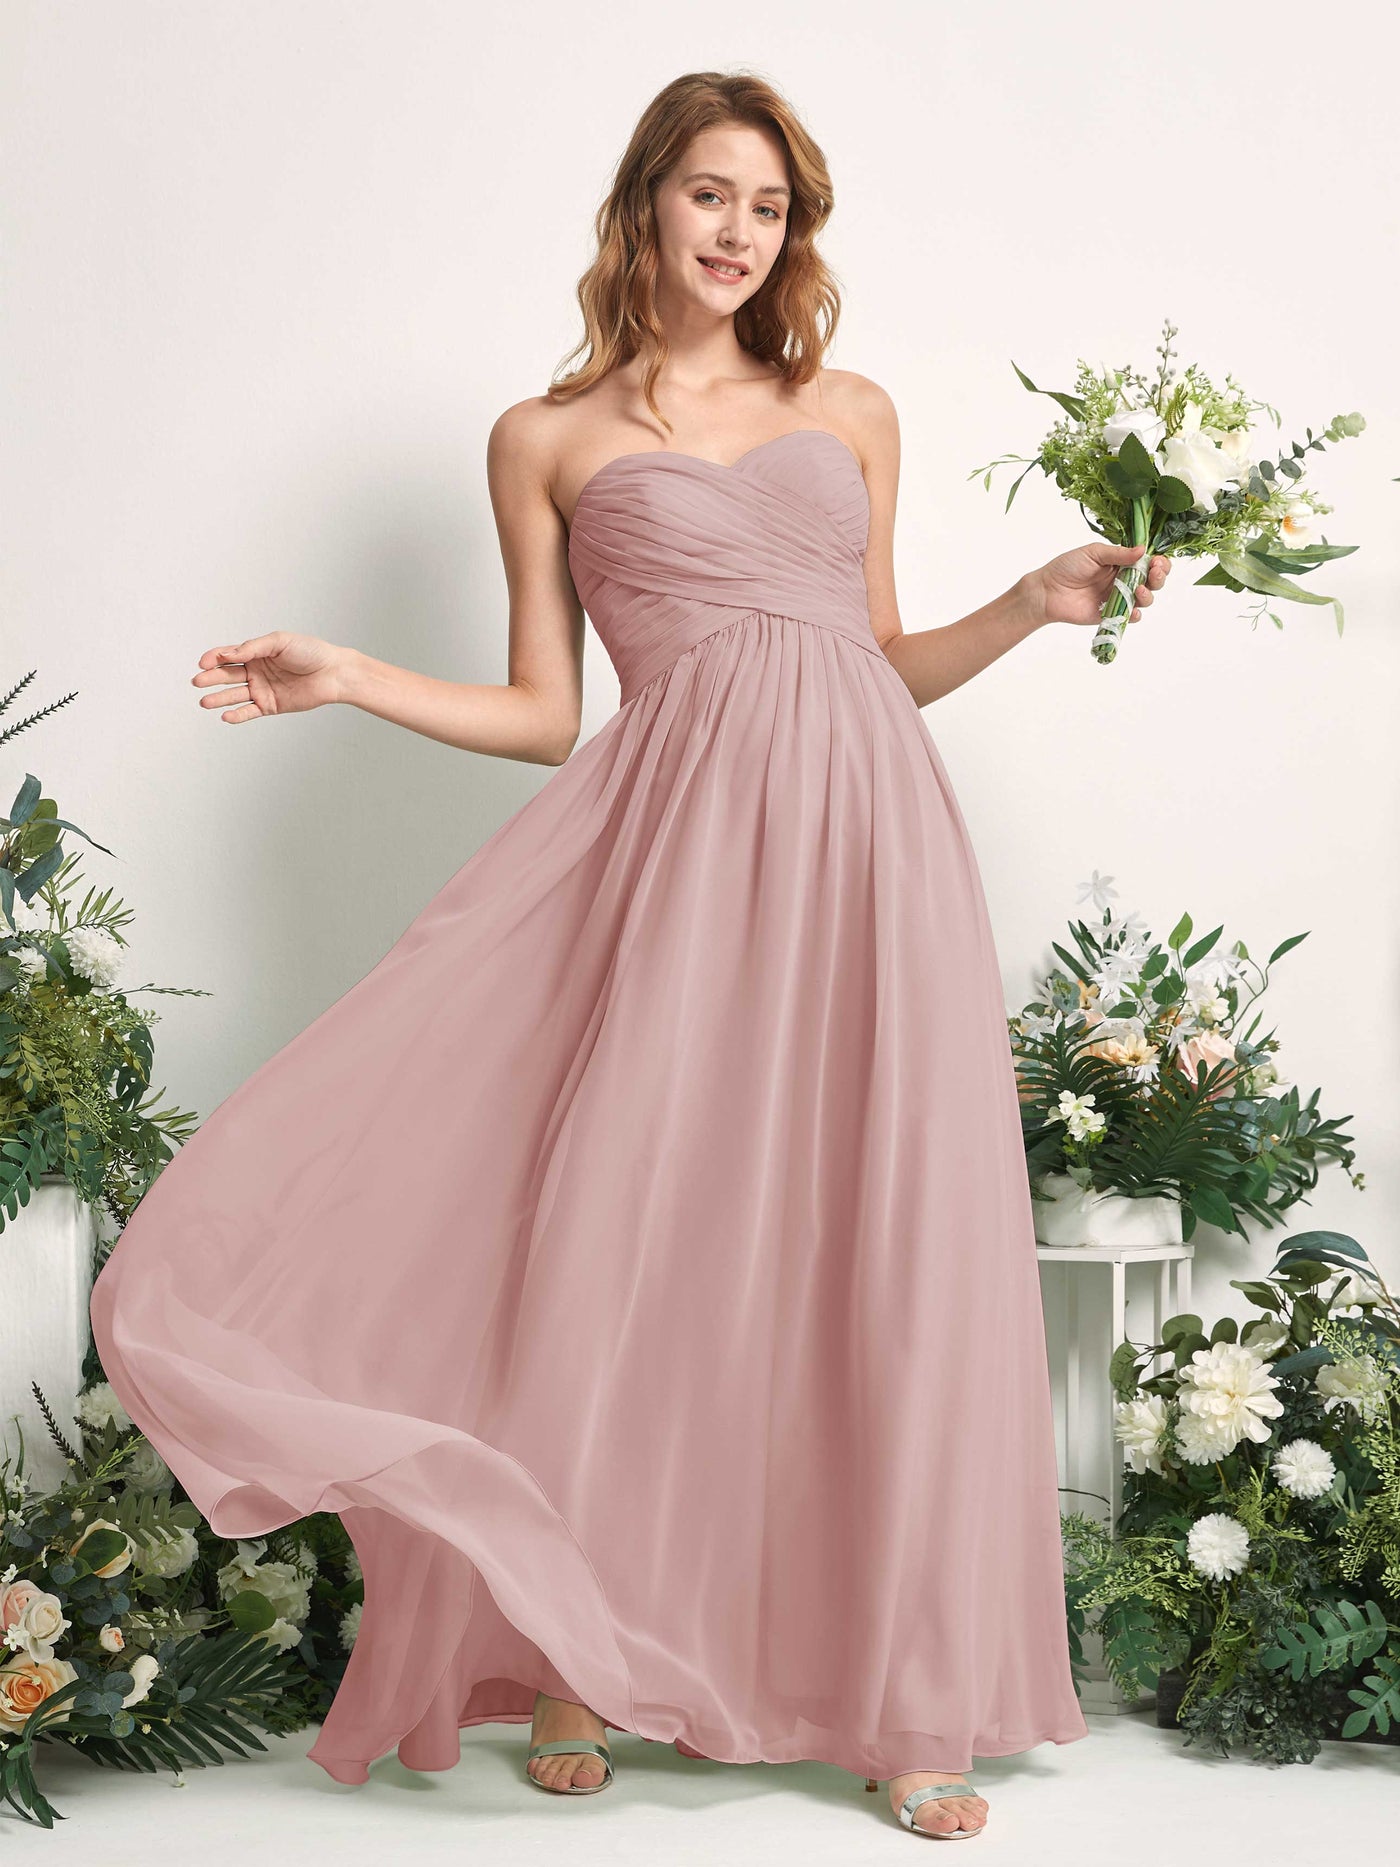 Bridesmaid Dress A-line Chiffon Sweetheart Full Length Sleeveless Wedding Party Dress - Dusty Rose (81226909)#color_dusty-rose